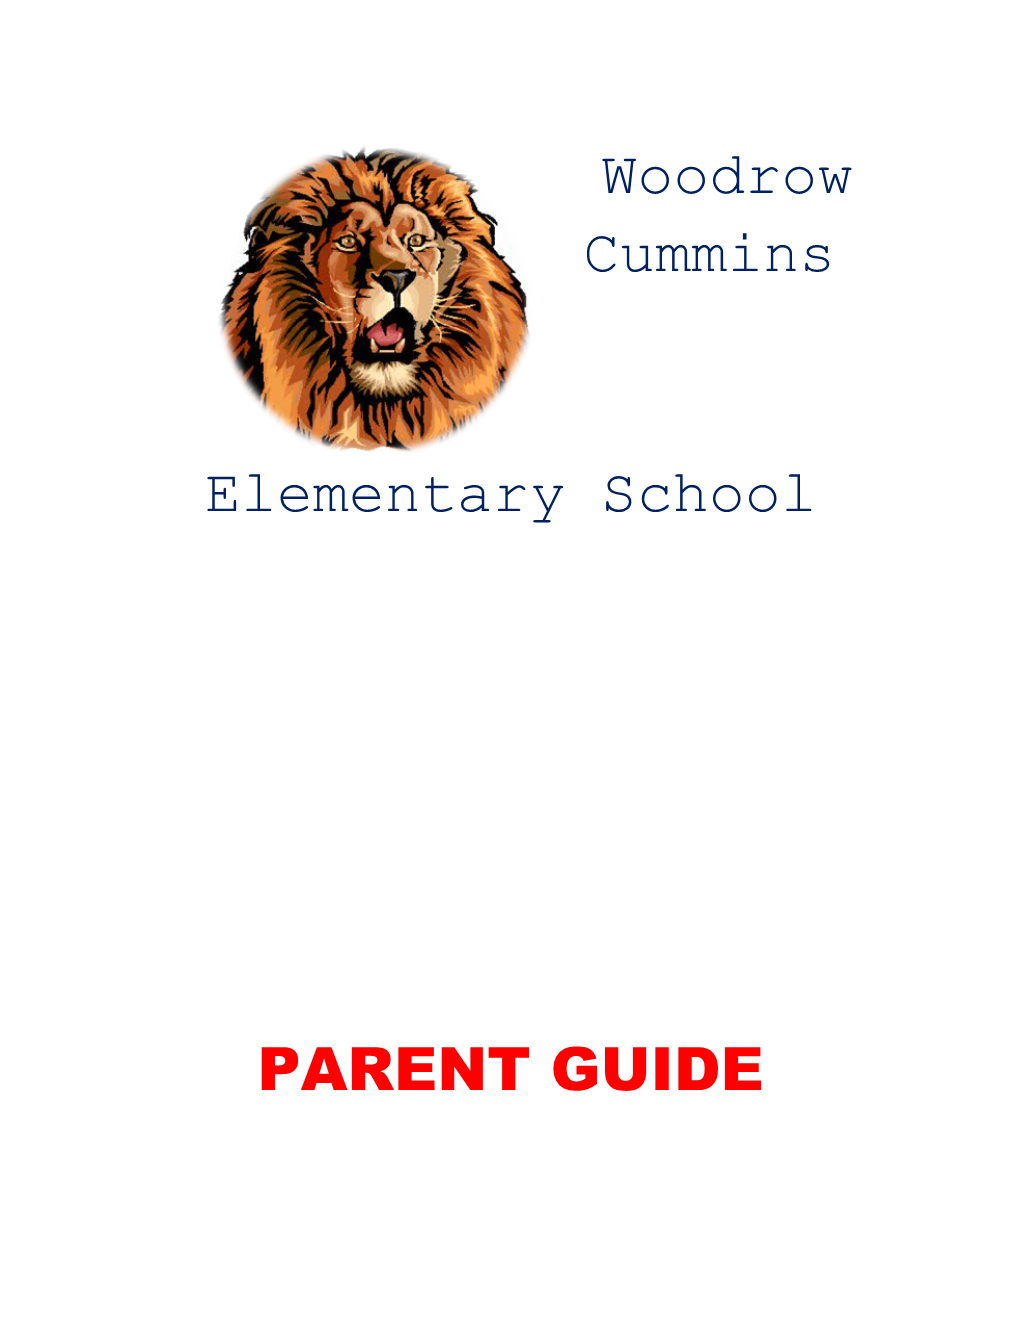 Woodrow Cummins Elementary